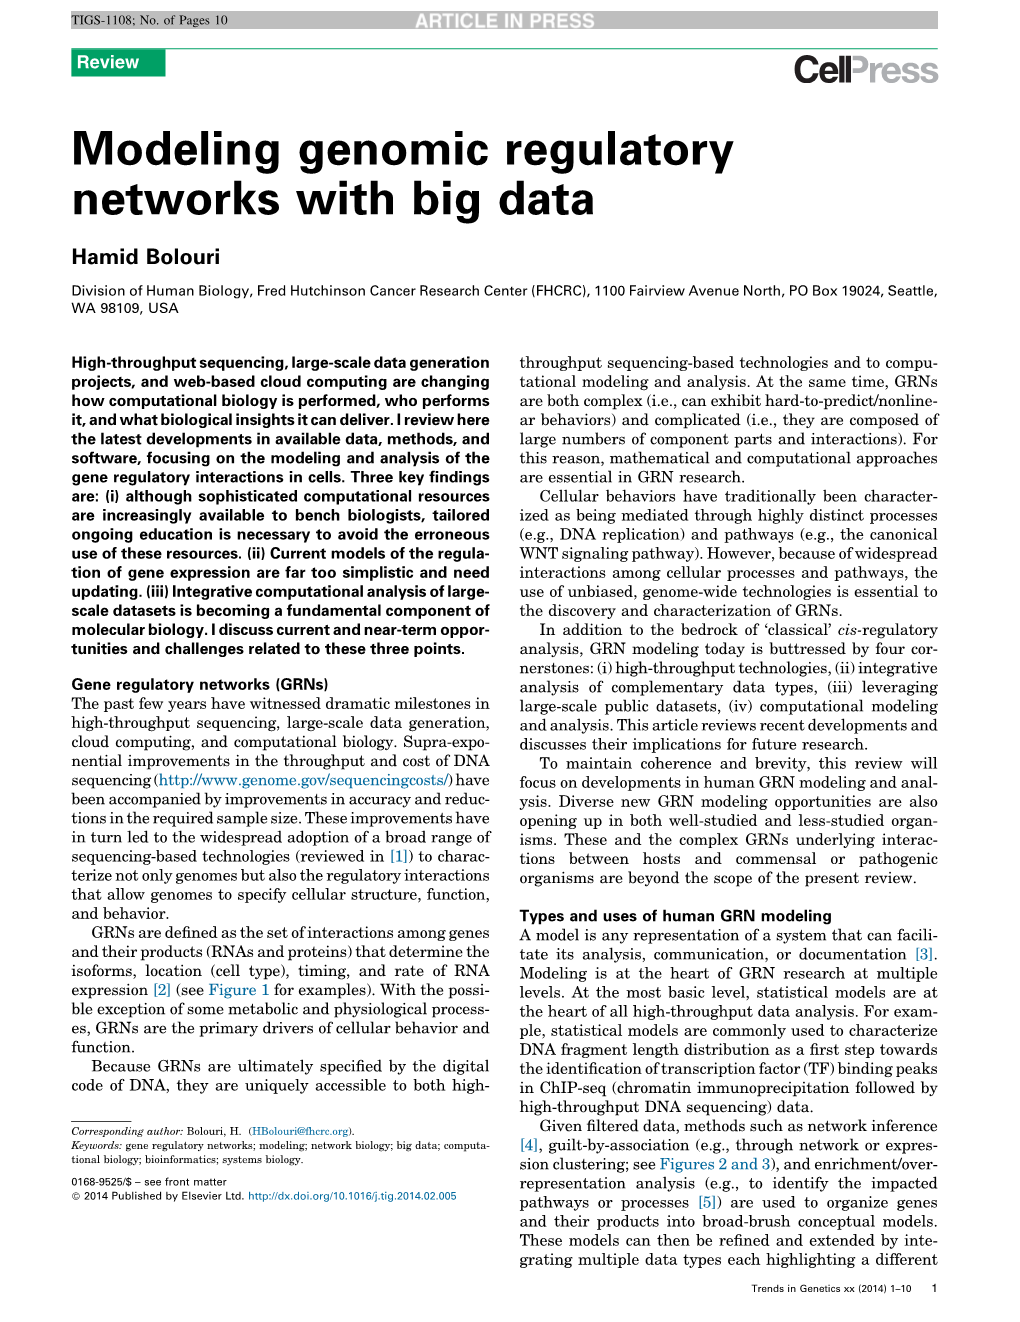 Modeling Genomic Regulatory Networks with Big Data